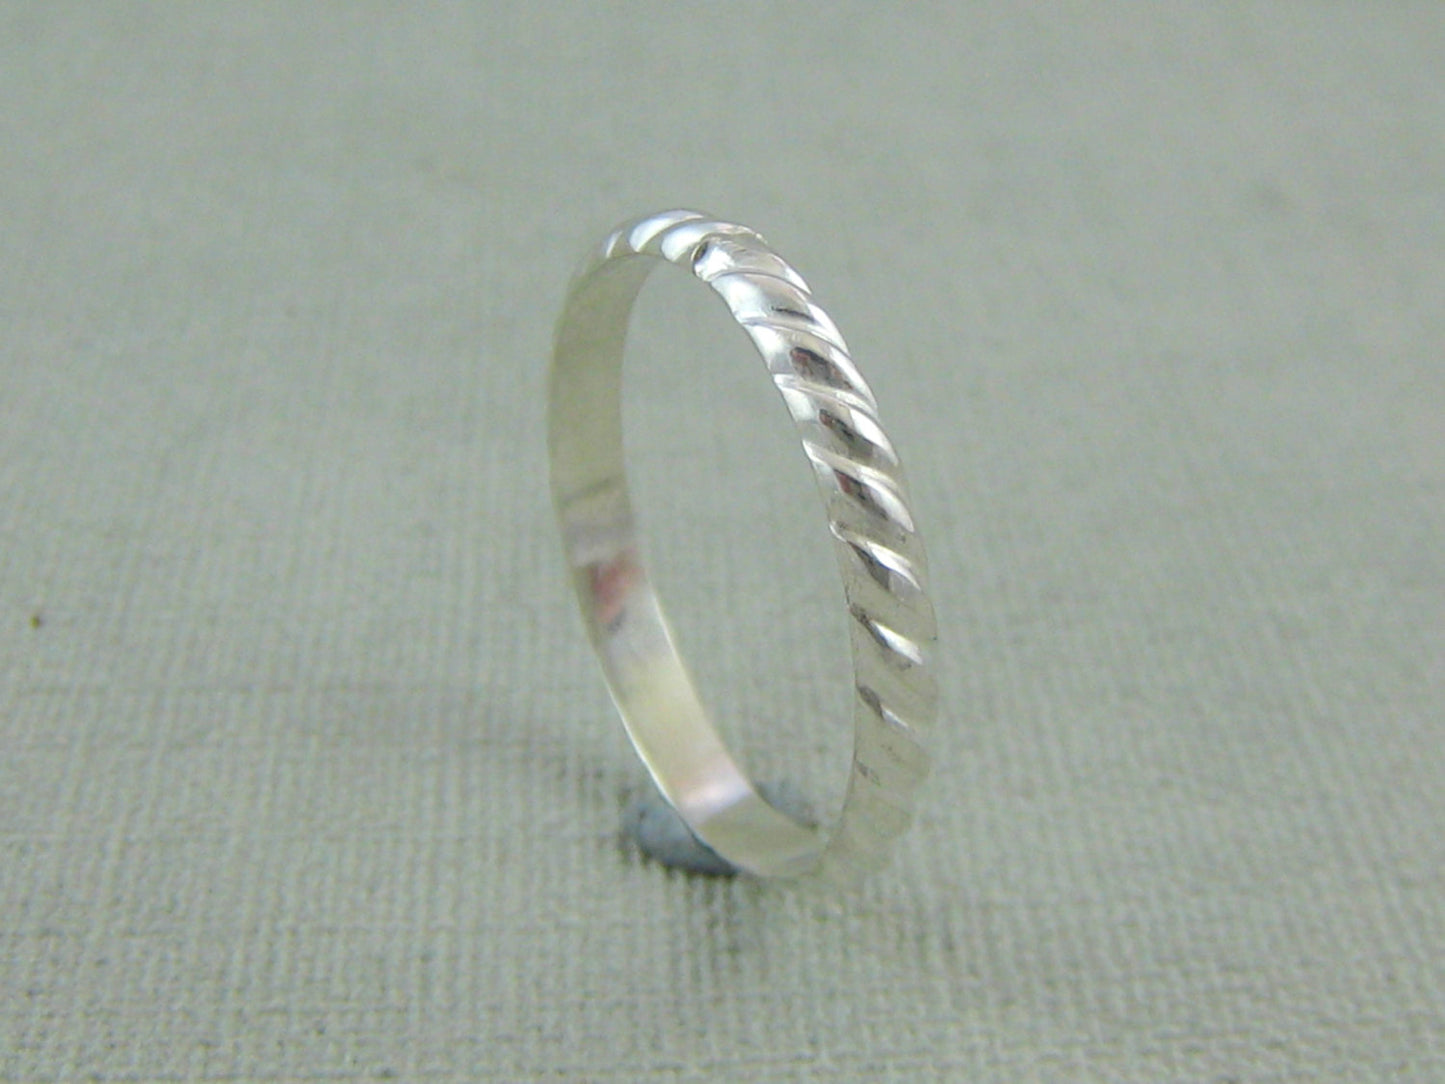 Silver "Twist" Stacker Ring